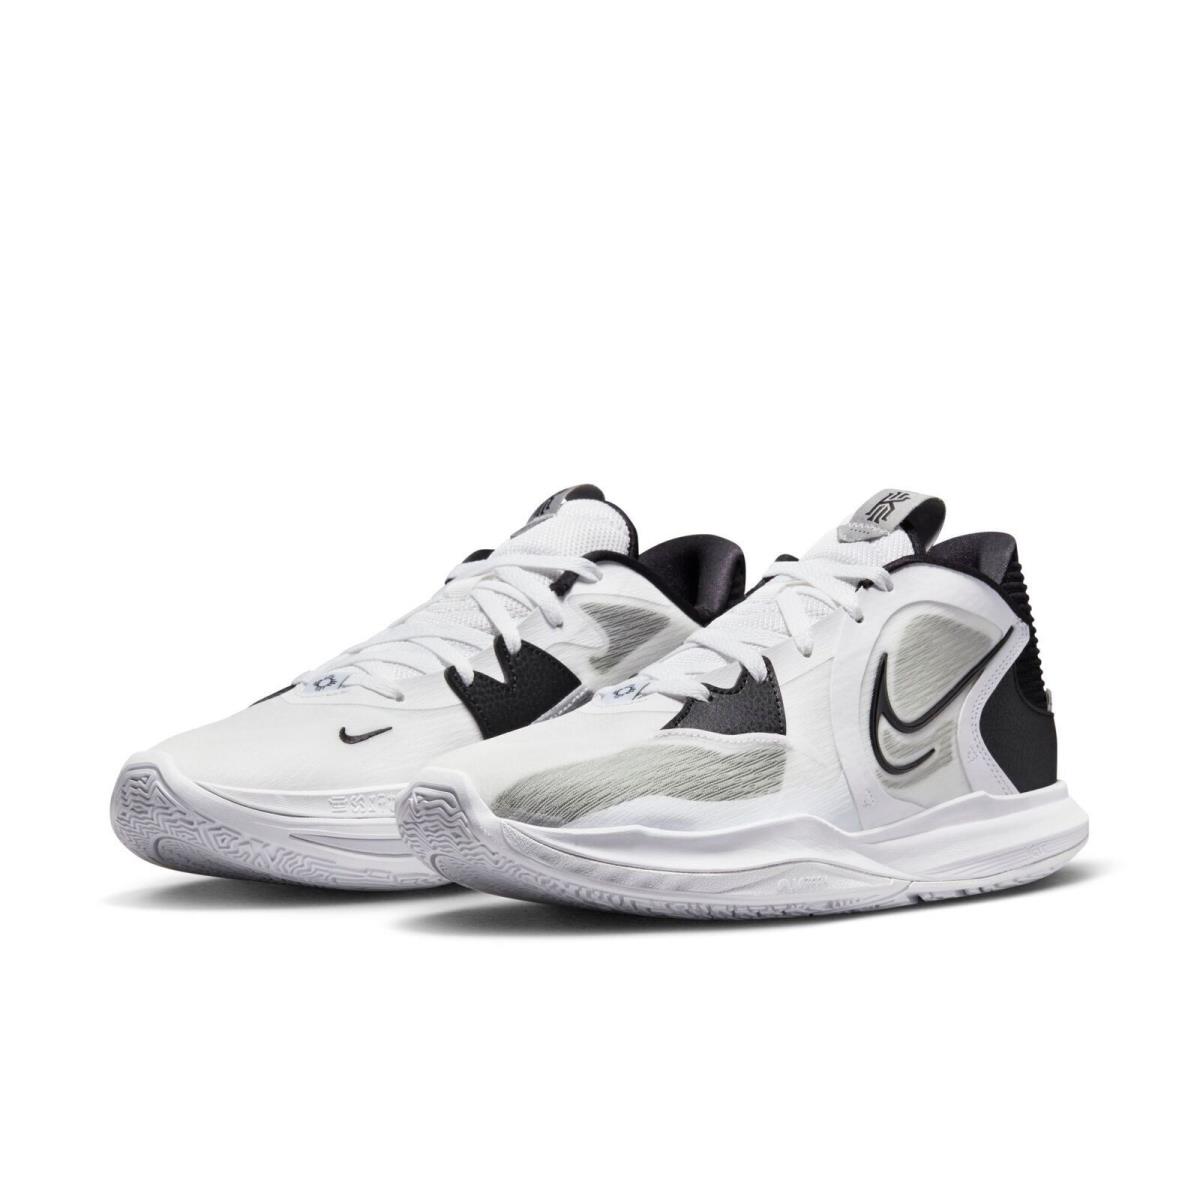 Nike Kyrie Low 5 DJ6012-102 Men White/gray/black Basketball Sneaker Shoes NR3859 - White/Gray/Black